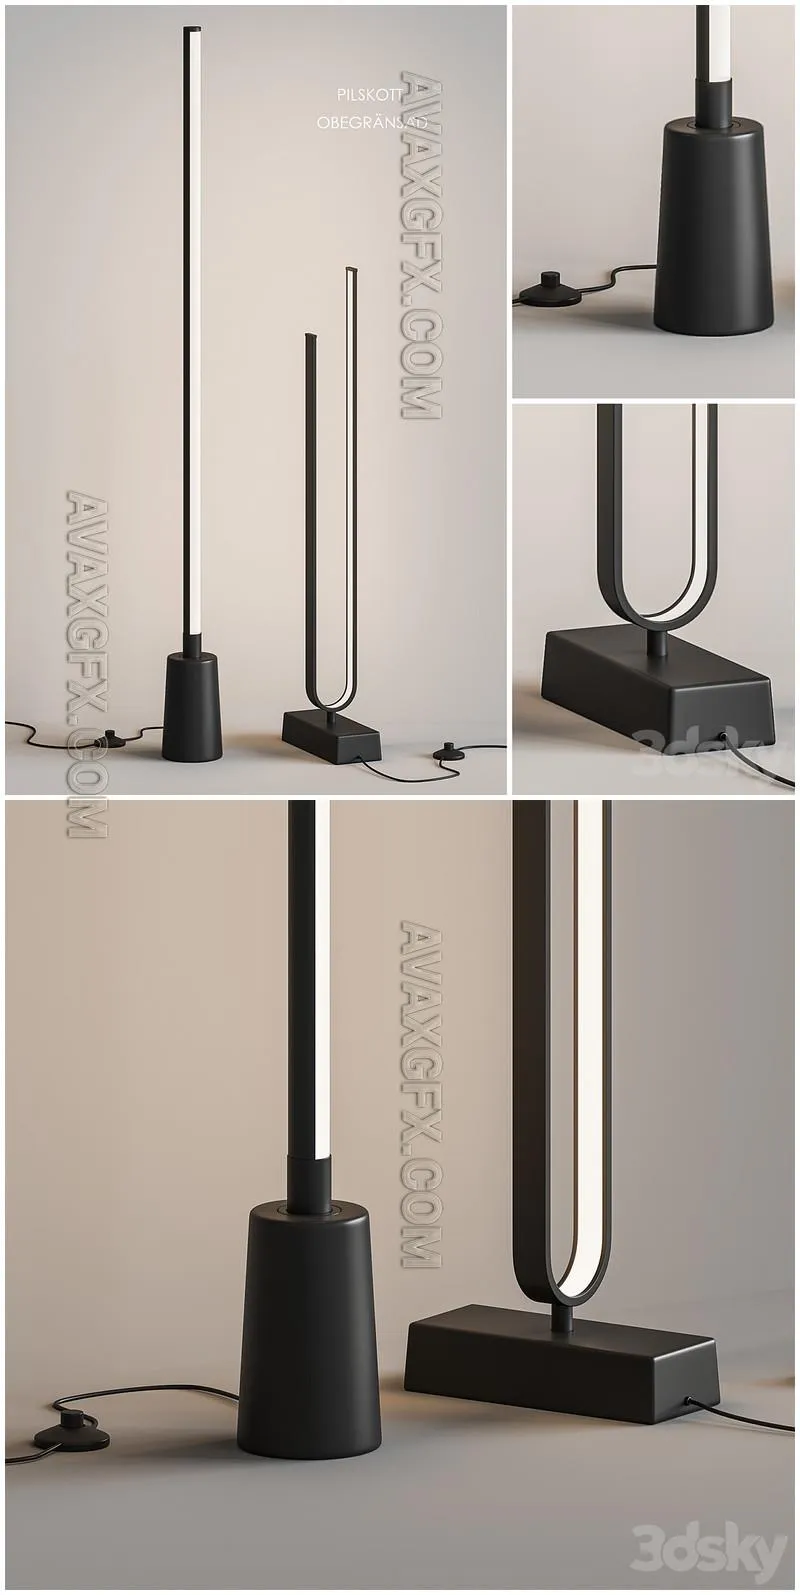 IKEA PILSKOTT OBEGRANSAD LED floor lamp - 3D Model